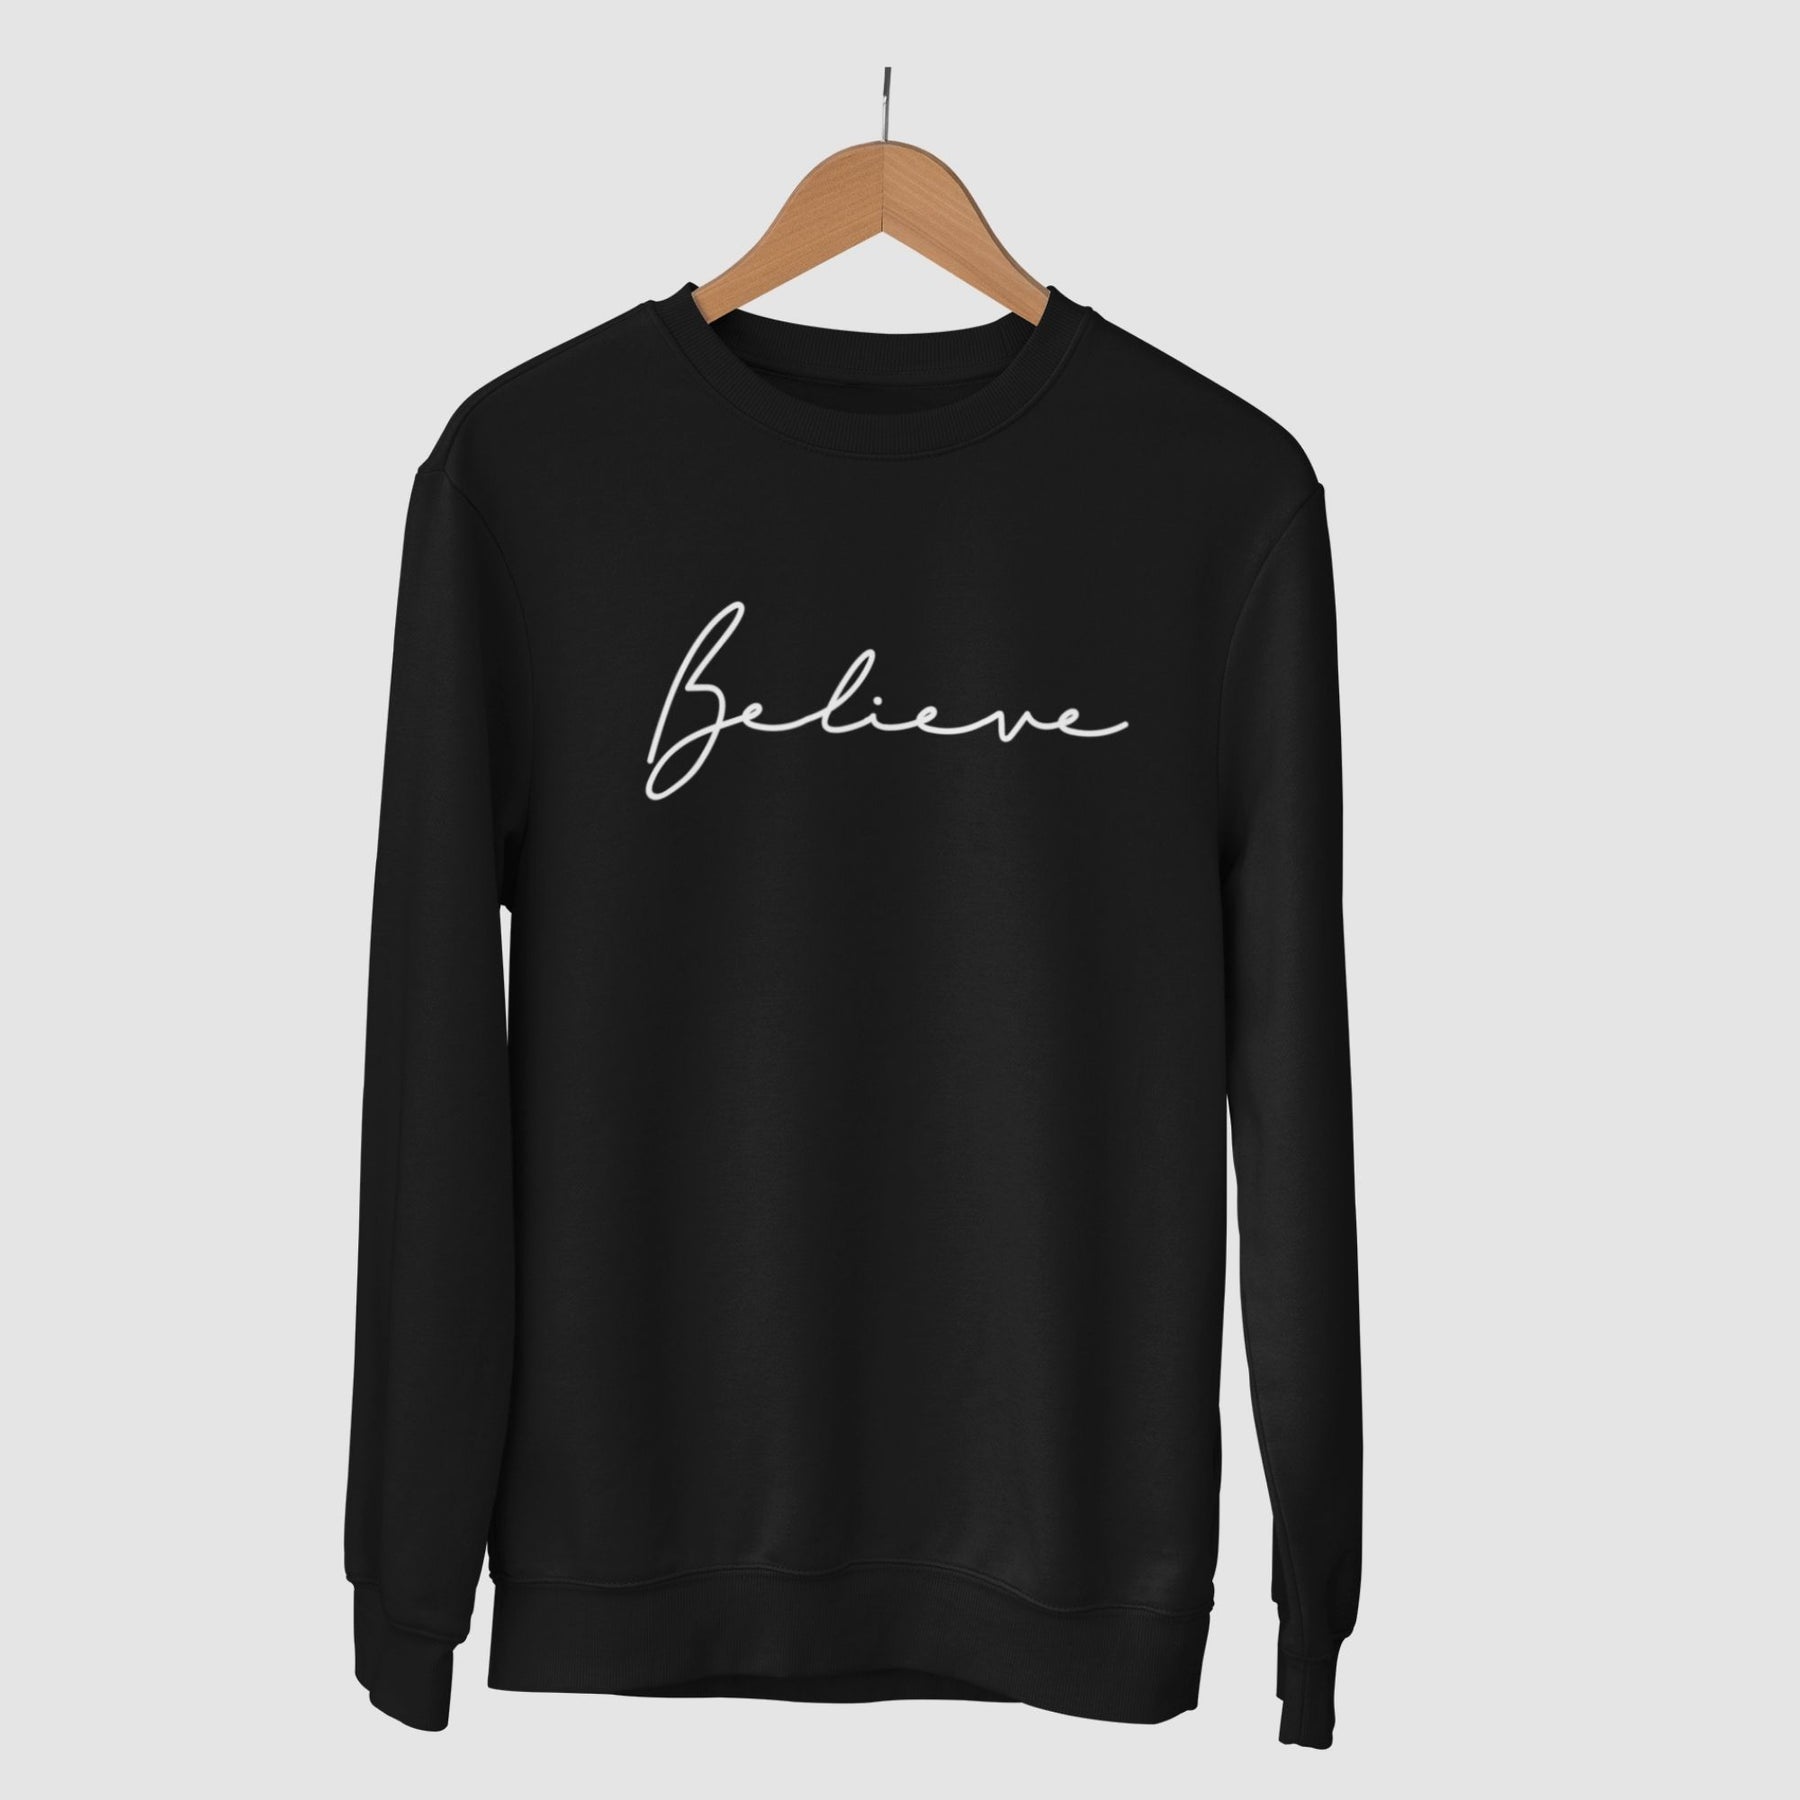 believe-cotton-printed-unisex-black-sweatshirt-gogirgit-com